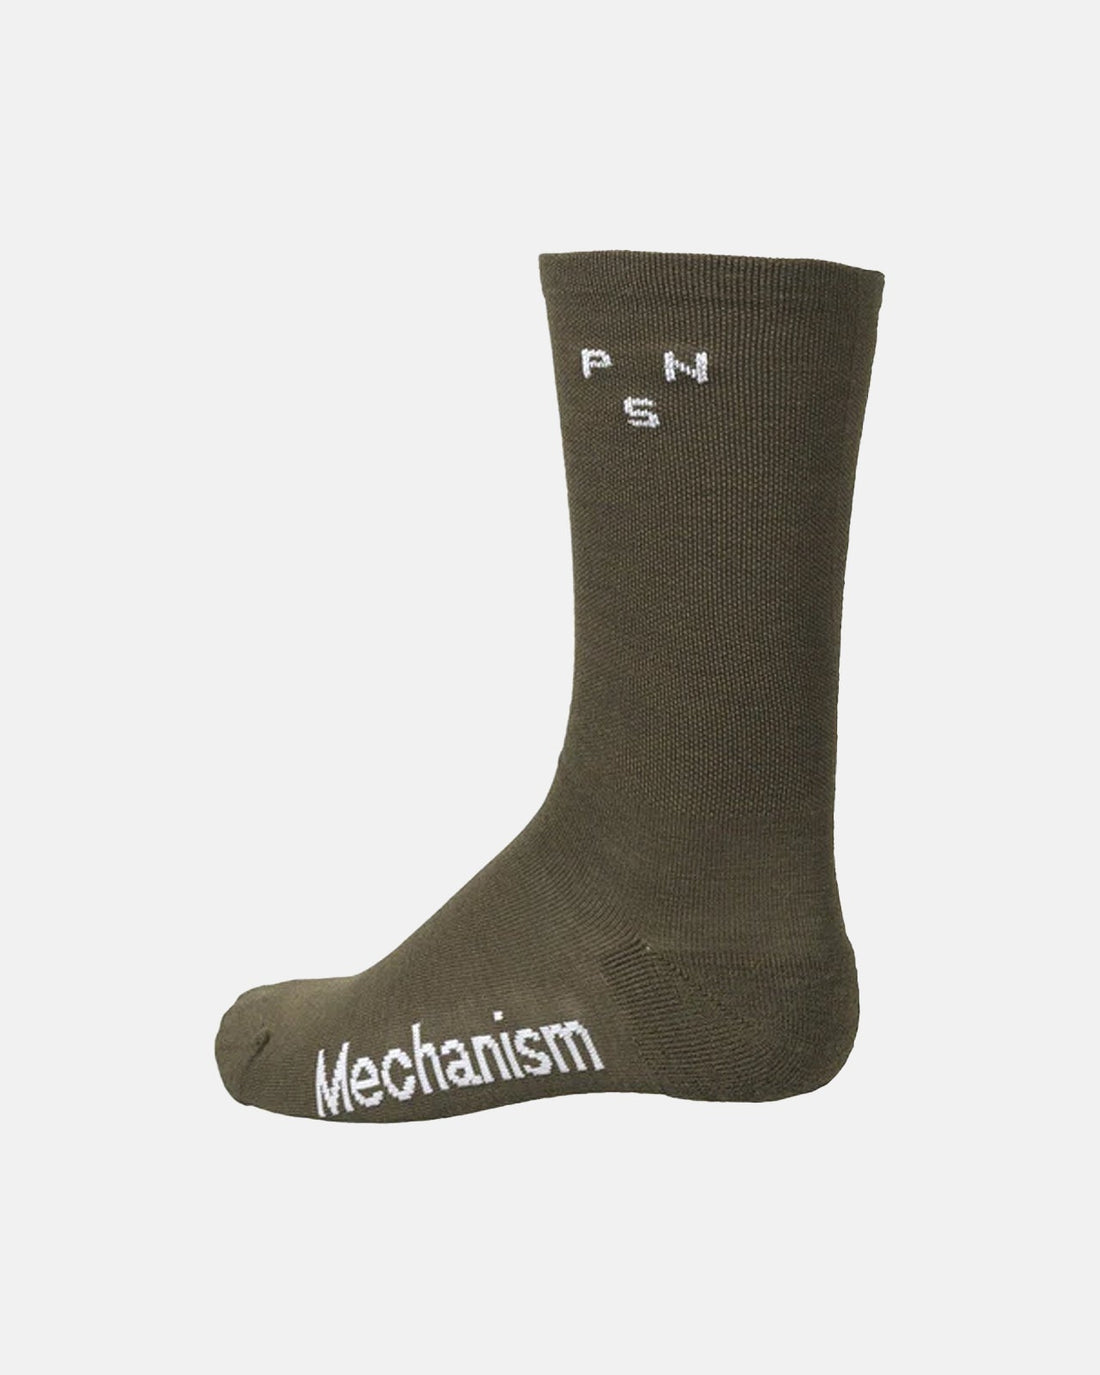 Mechanism Thermal Socks - Dark Olive